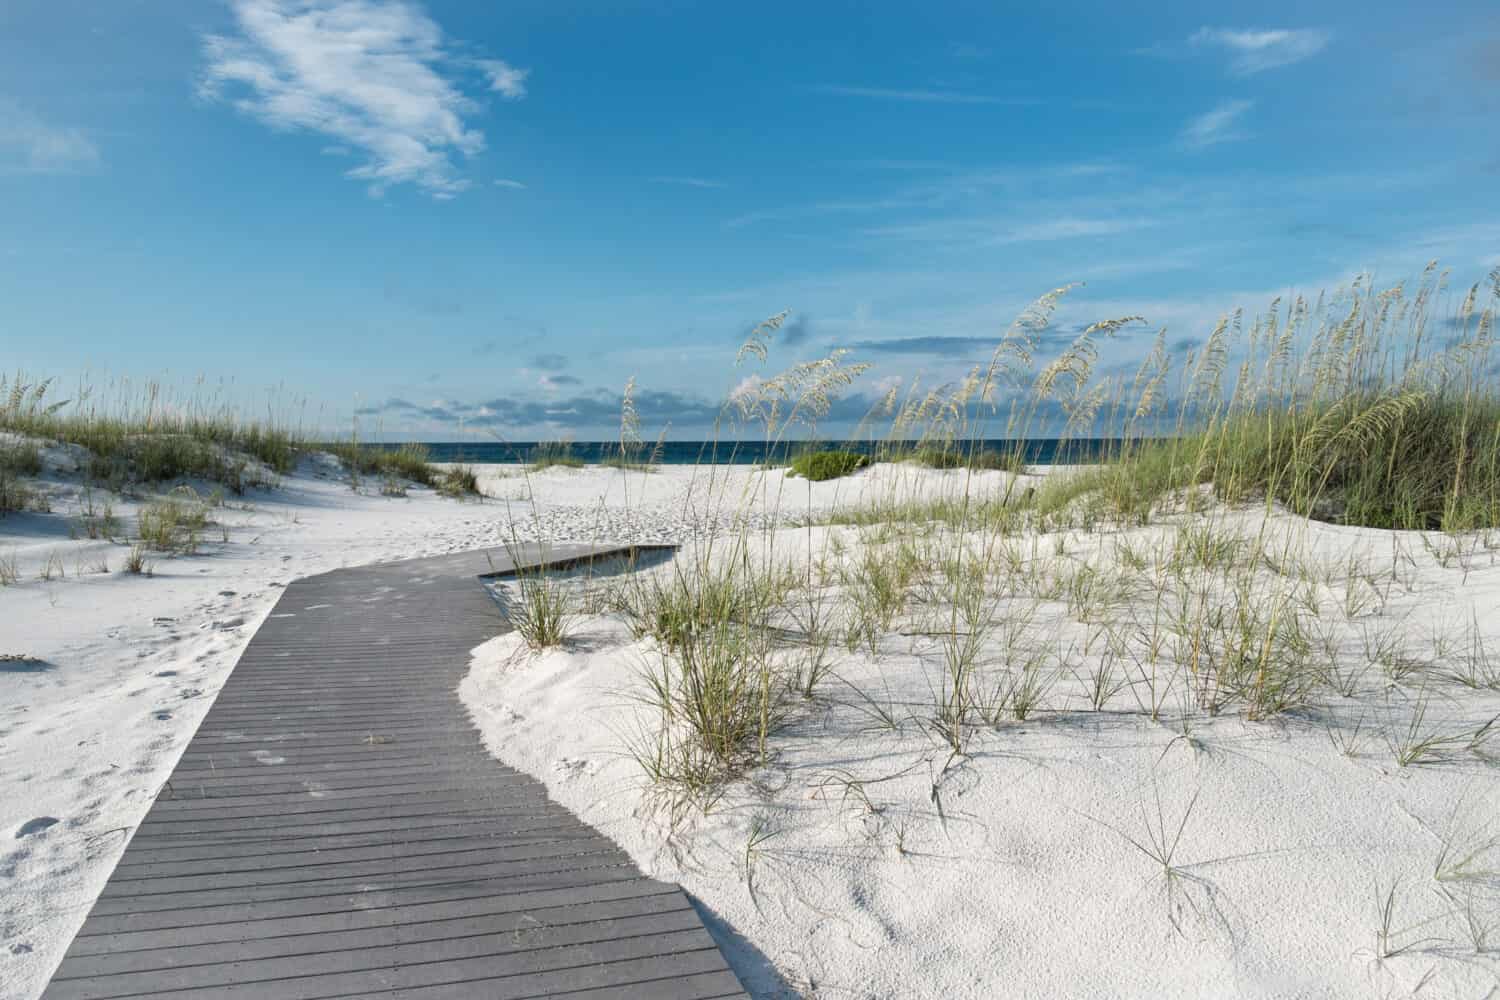 Small rustic boardwalk footpath through snow white sand dunes at a pristine Florida beach.